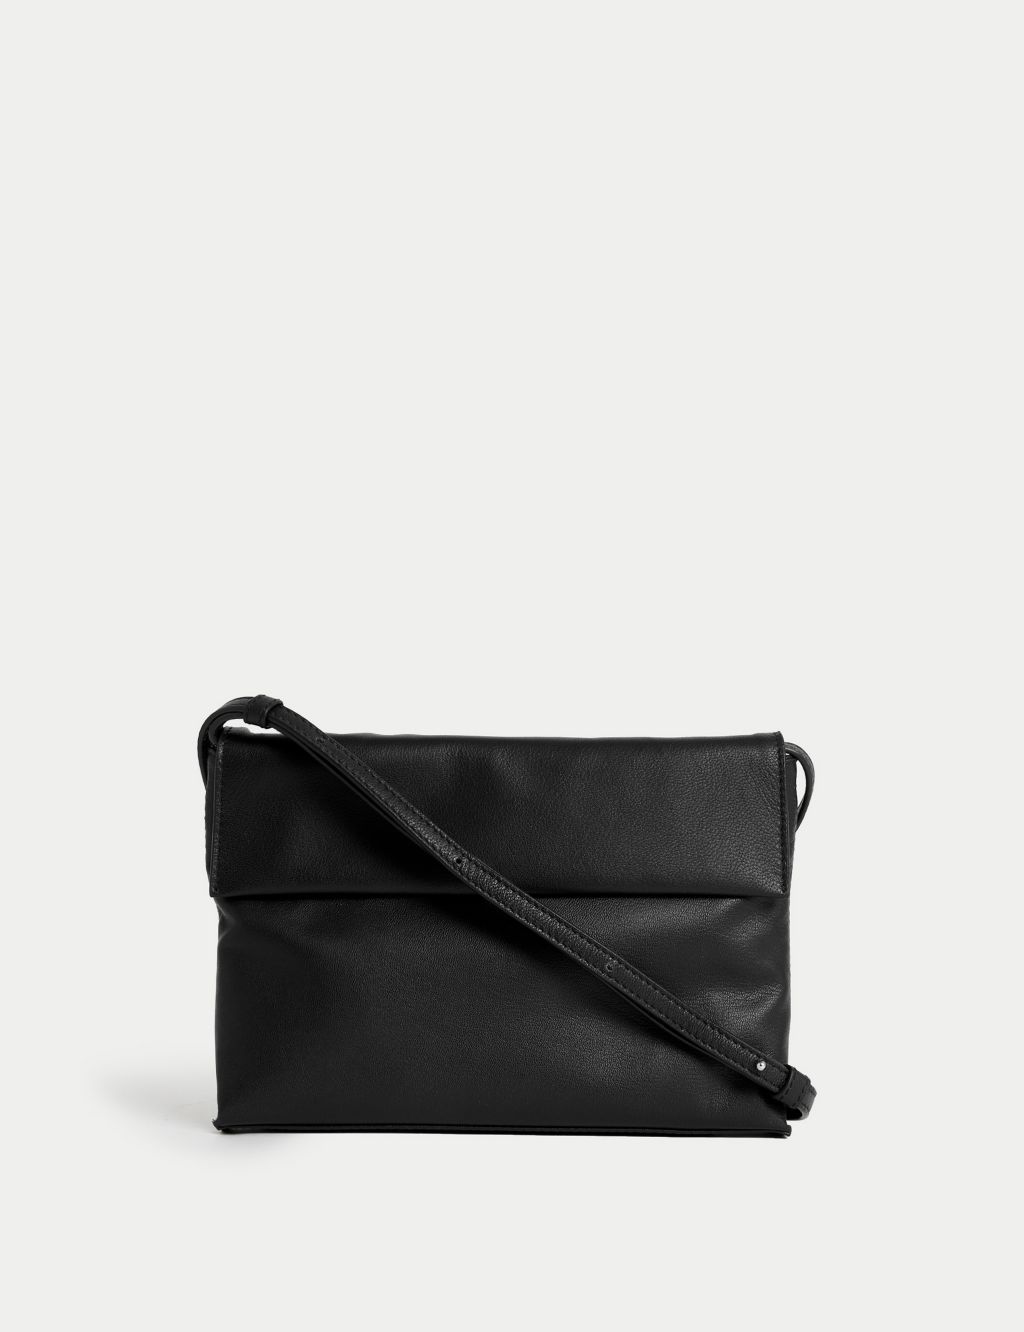 Handbags | Women's Bags | M&S